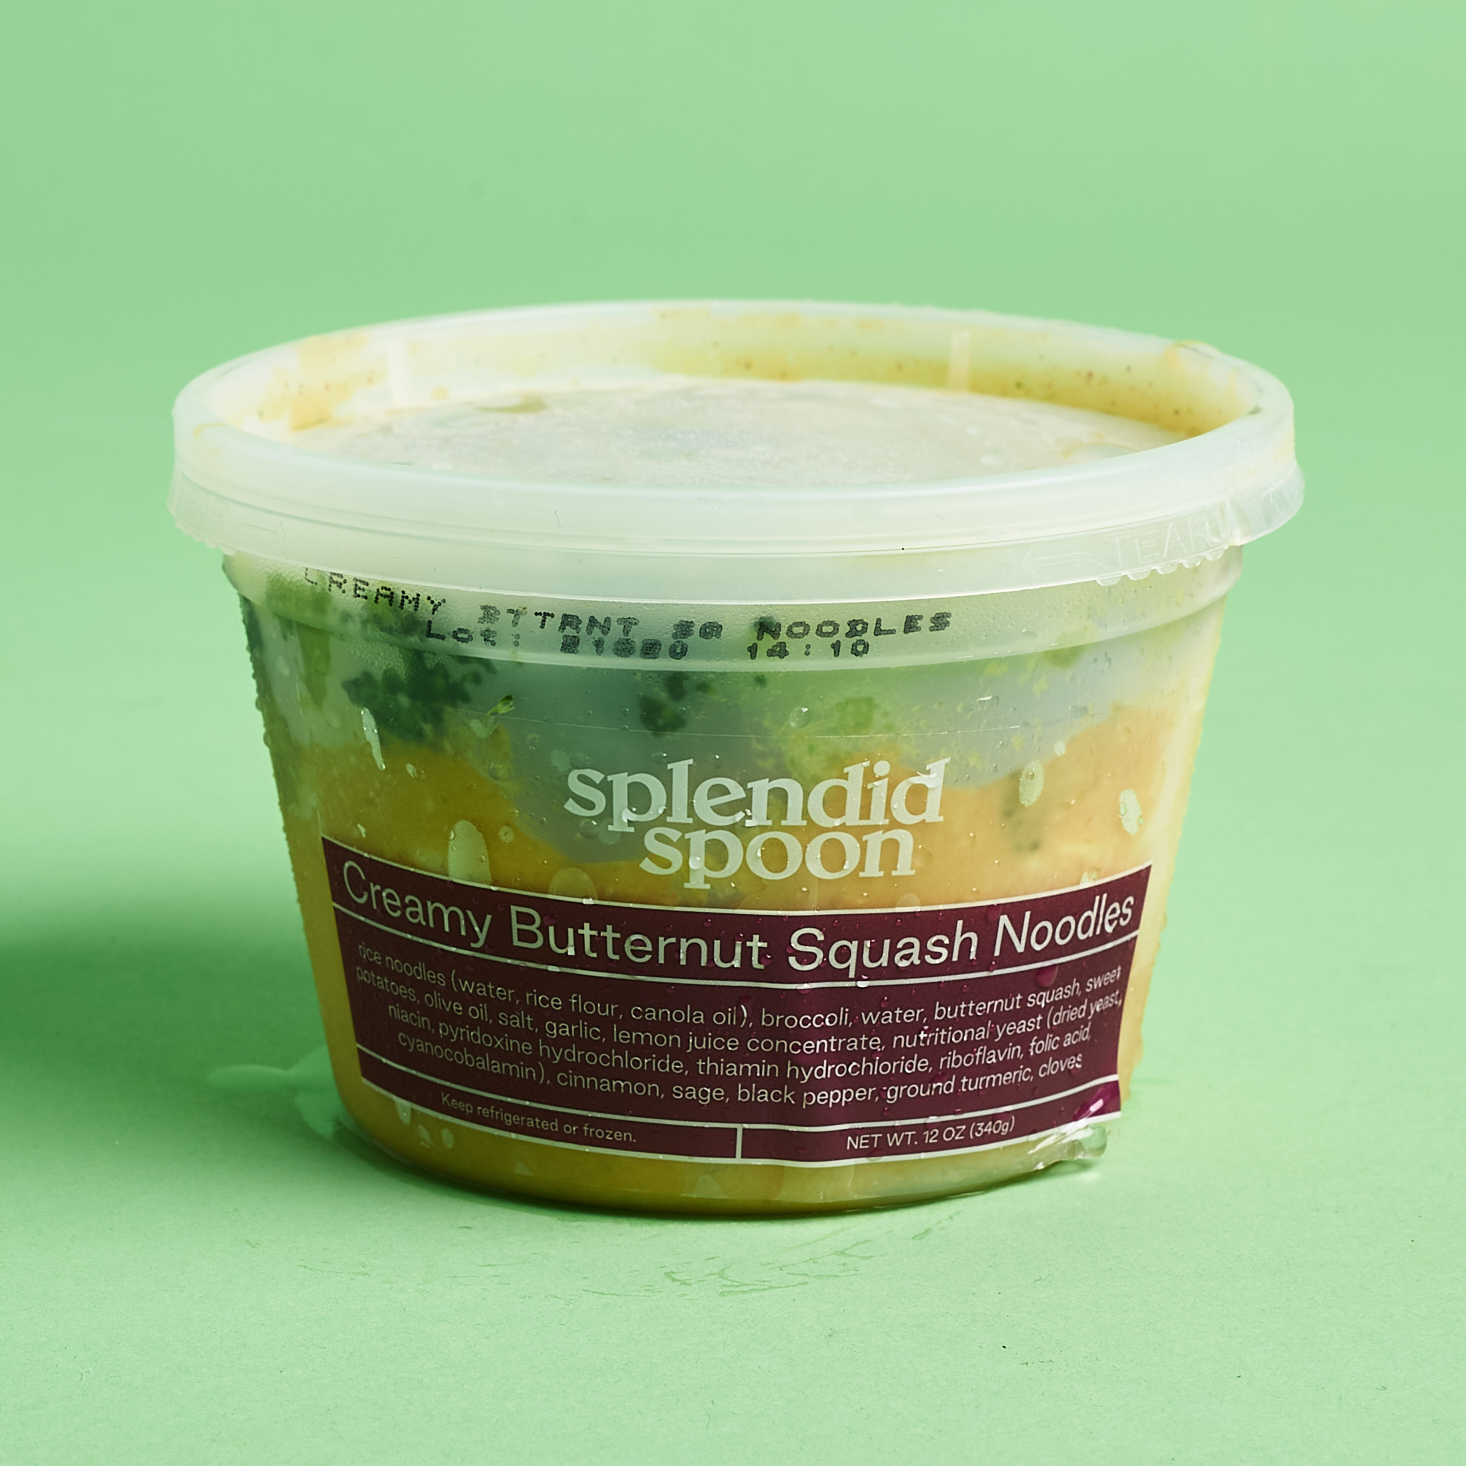 Splendid Spoon August 2020 creamy butternut squash bowl